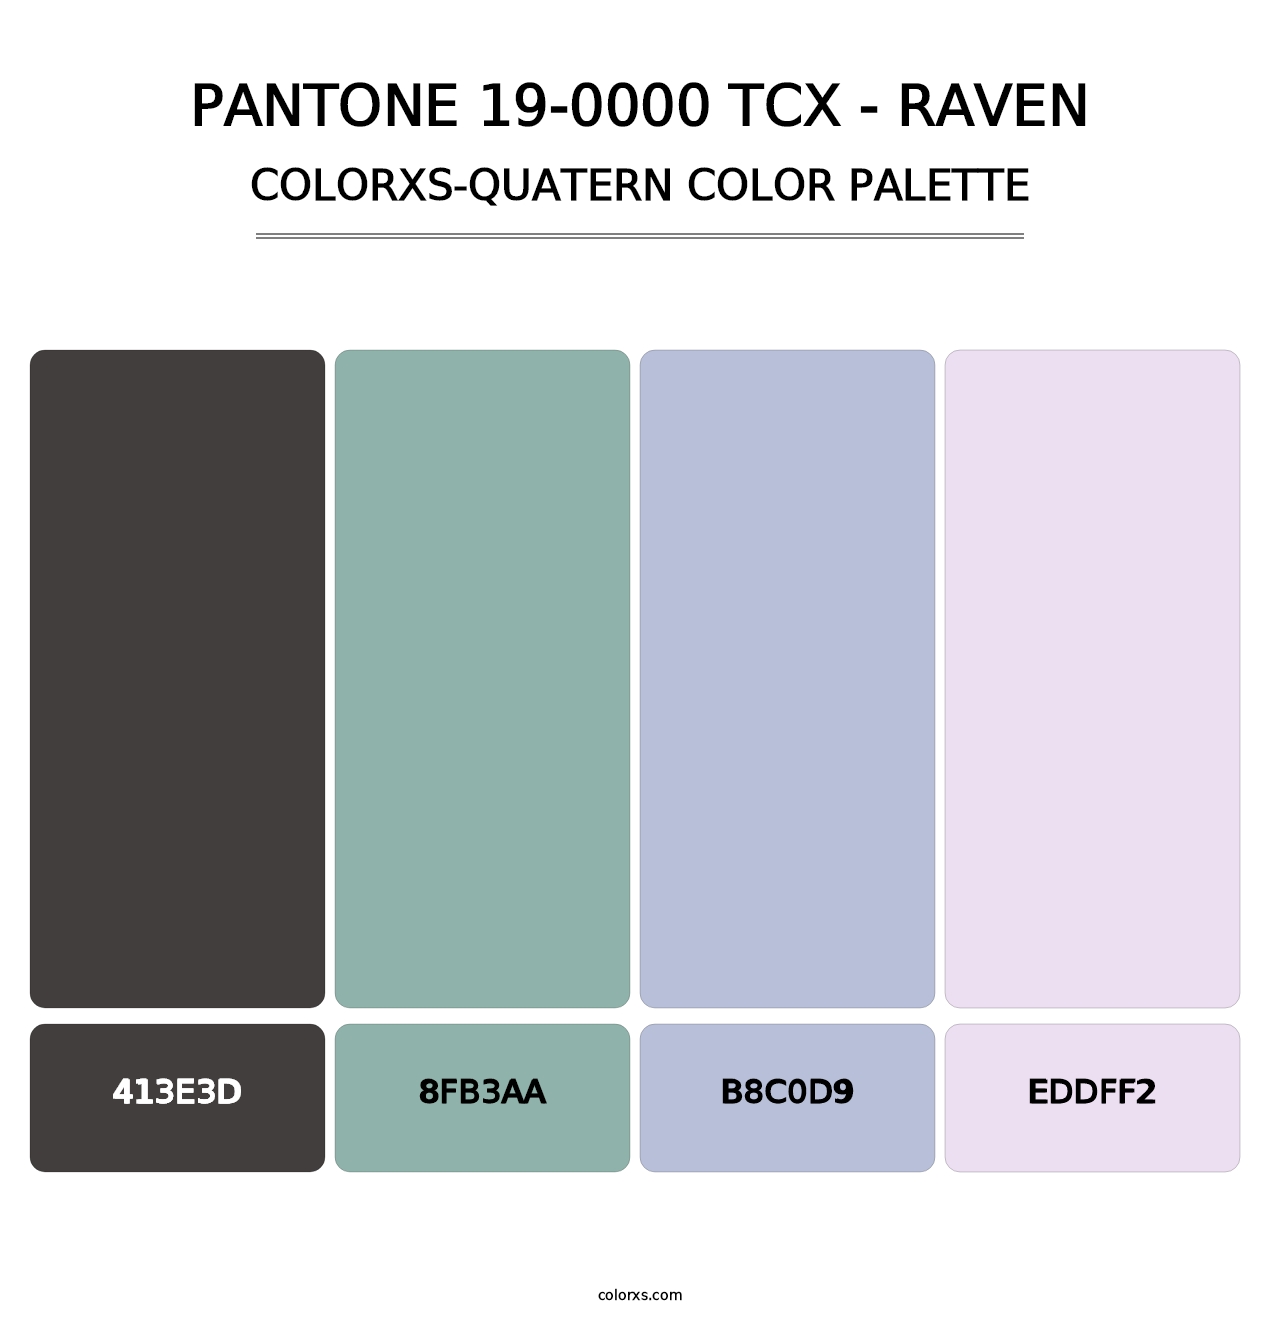 PANTONE 19-0000 TCX - Raven - Colorxs Quatern Palette